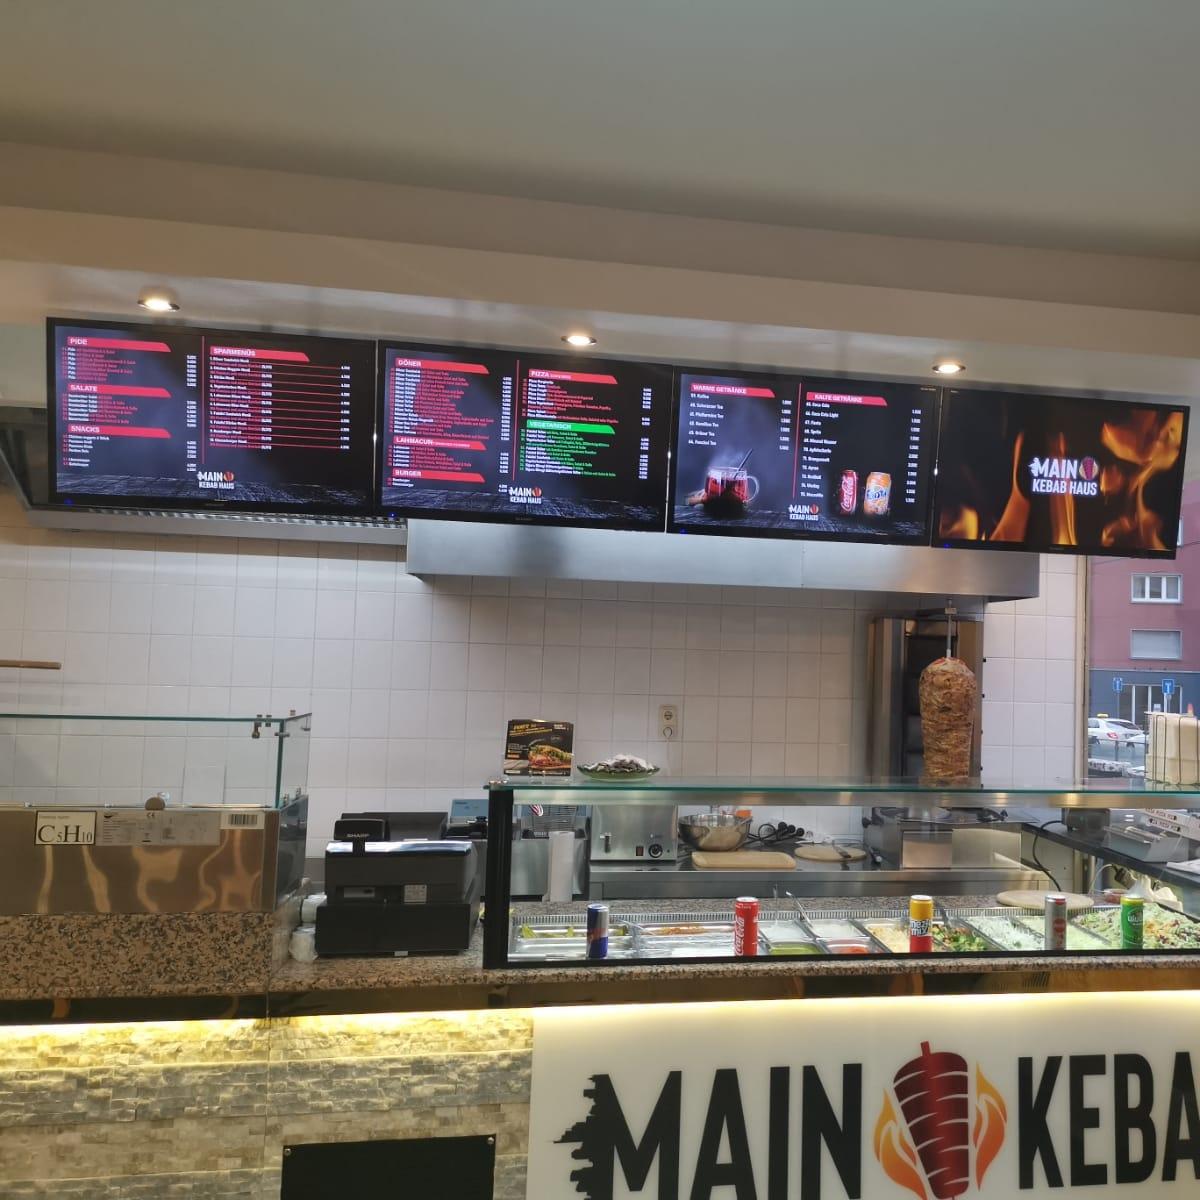 Restaurant "Main Kebab Haus" in Frankfurt am Main